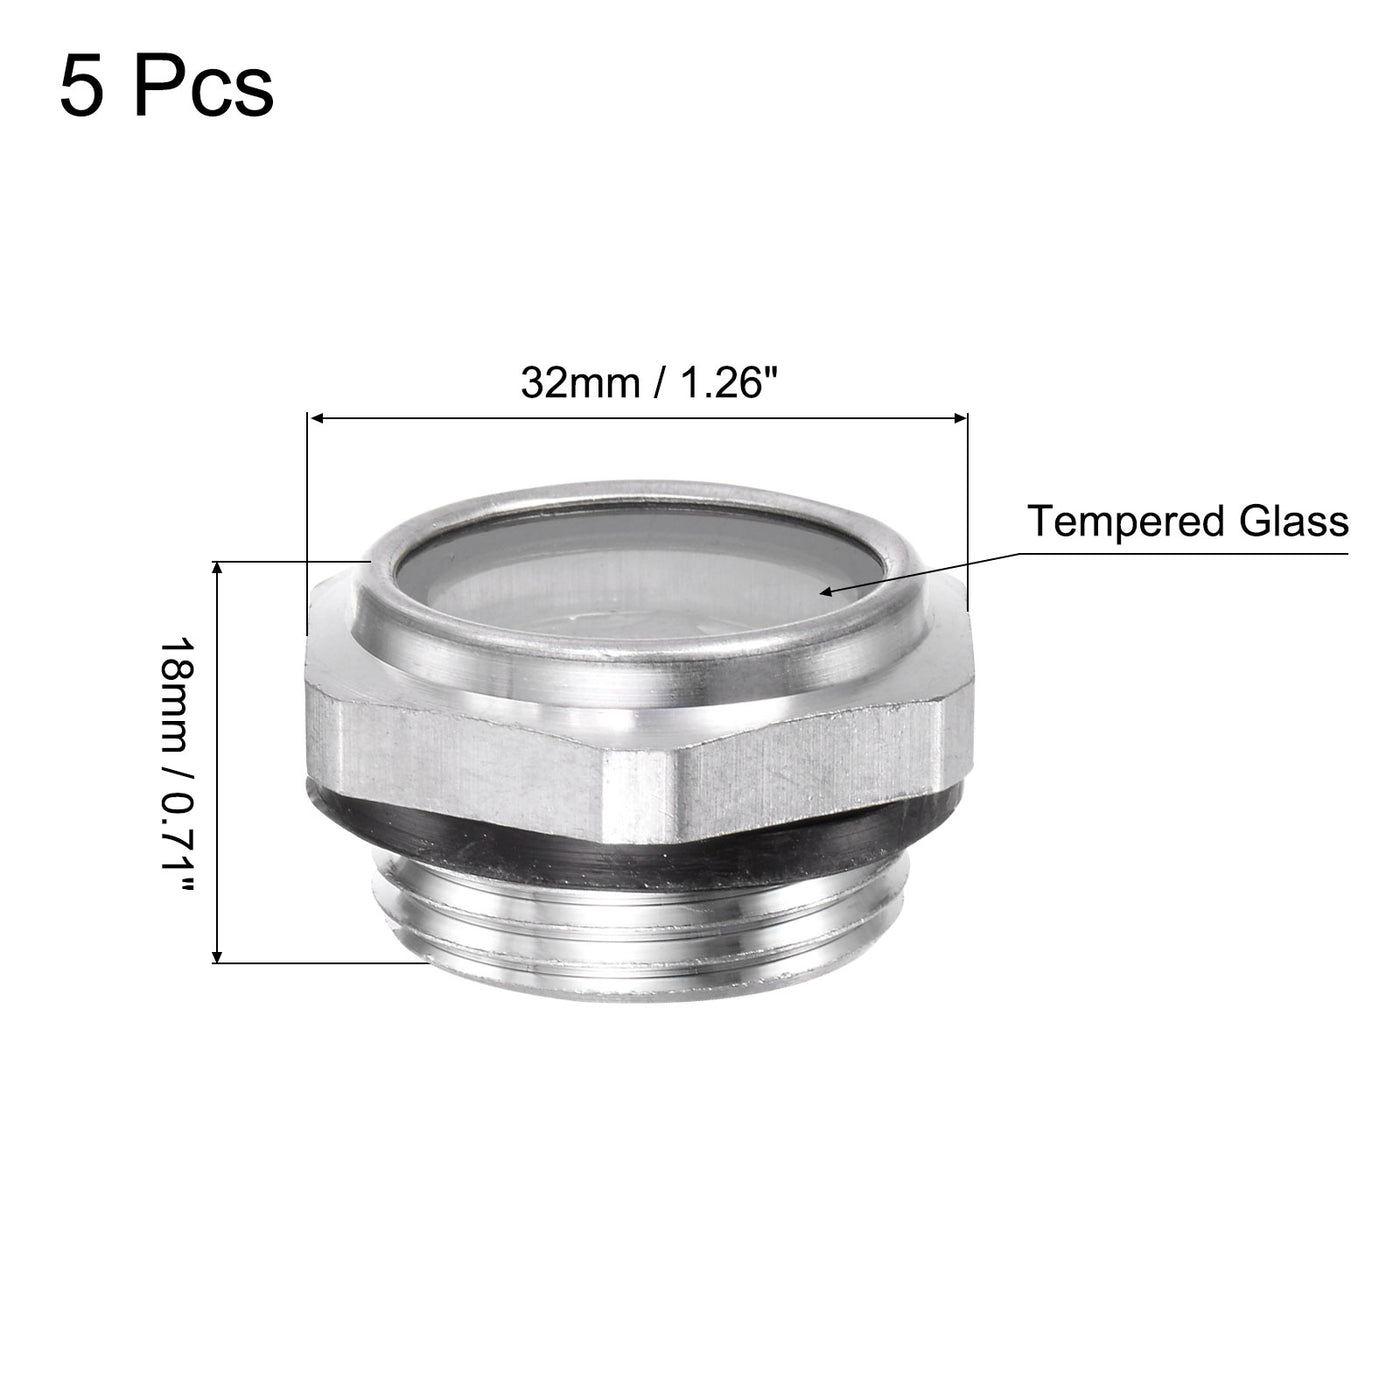 uxcell Uxcell Air Compressor Oil Level Gauge Sight Glass G3/4 Male Thread Aluminum 5Pcs